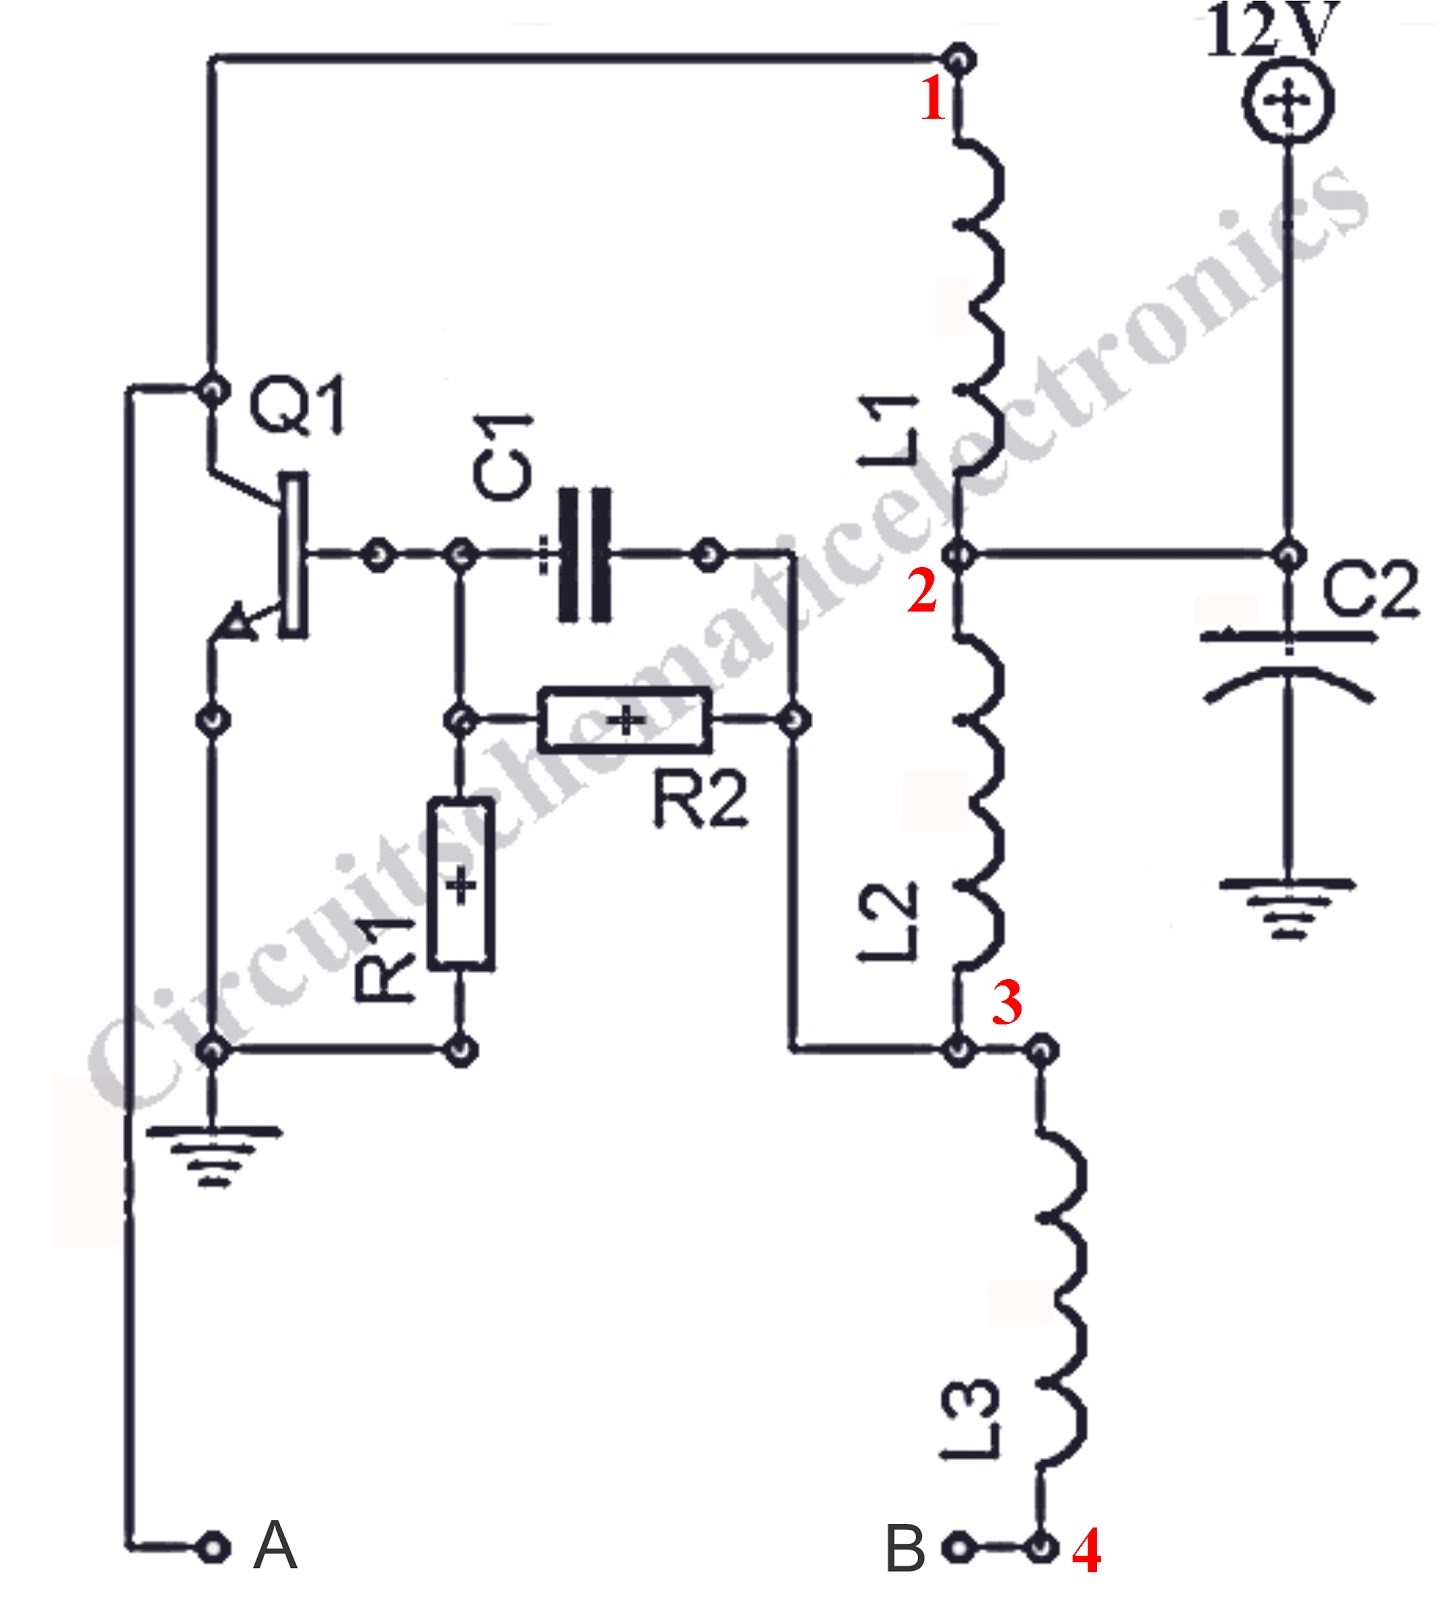 T8 Electronic Ballast Wiring Diagram Webtor Bunch Ideas